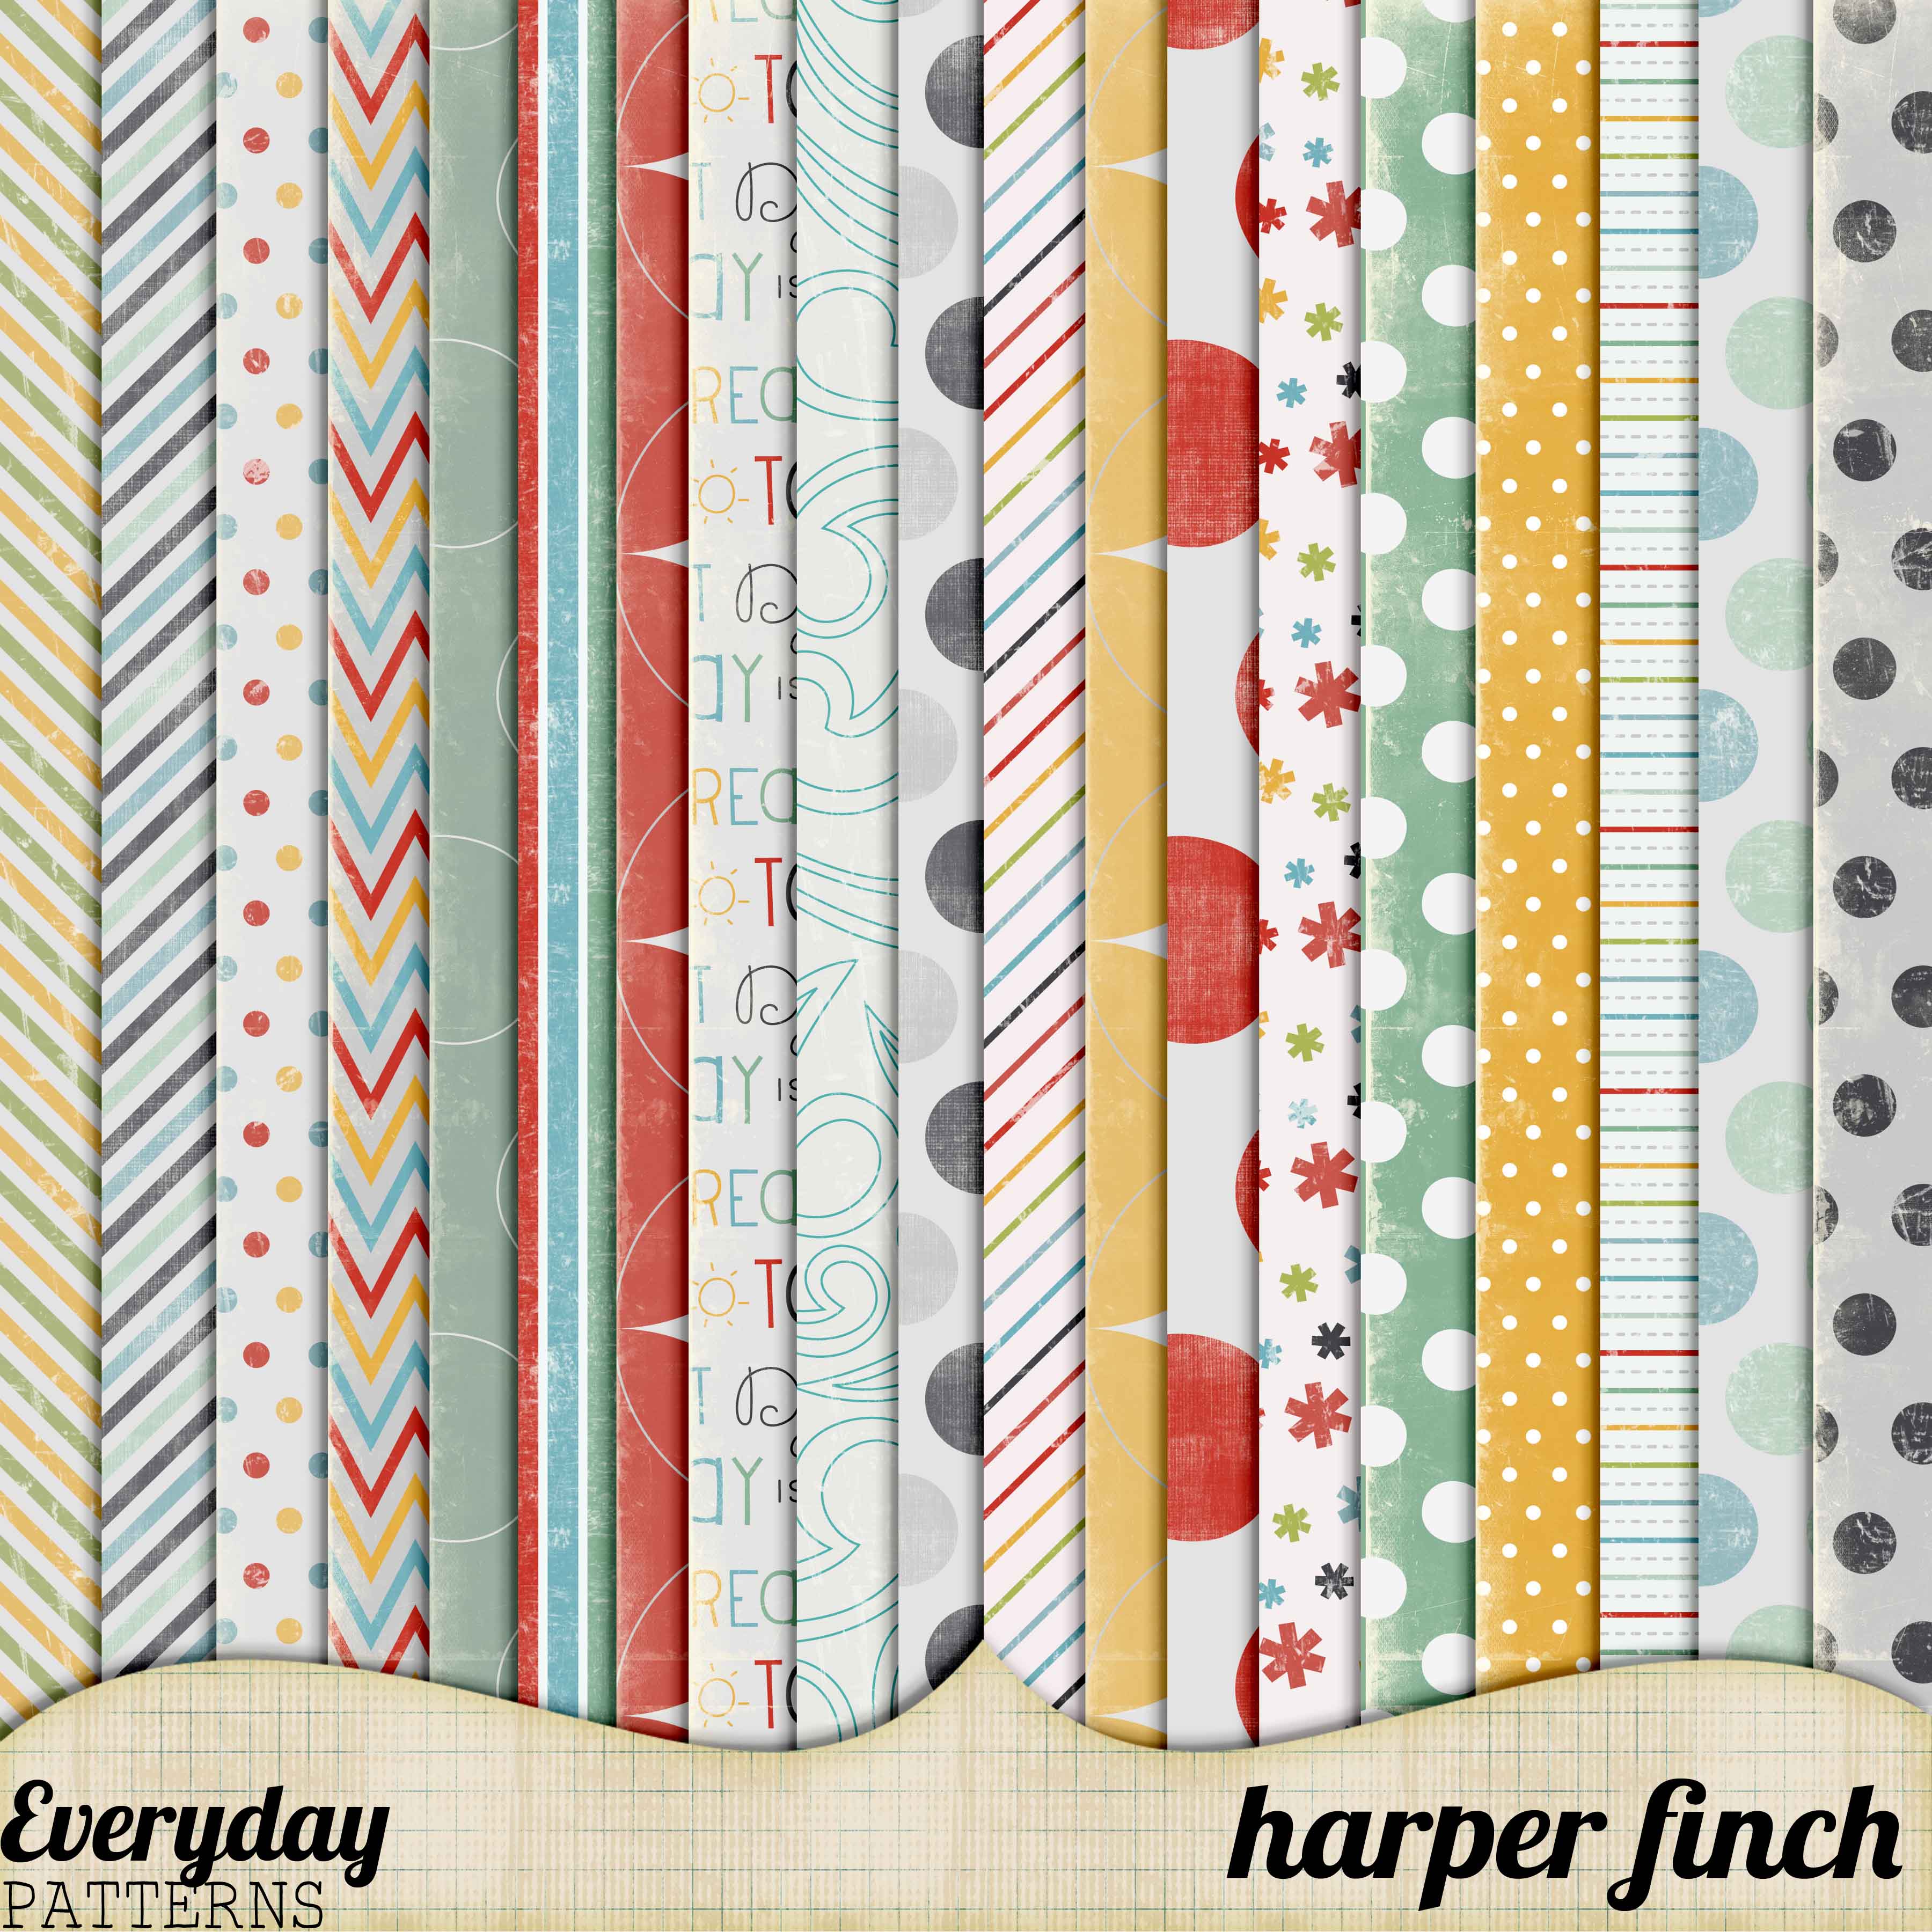 Everyday Patterns by Harper Finch